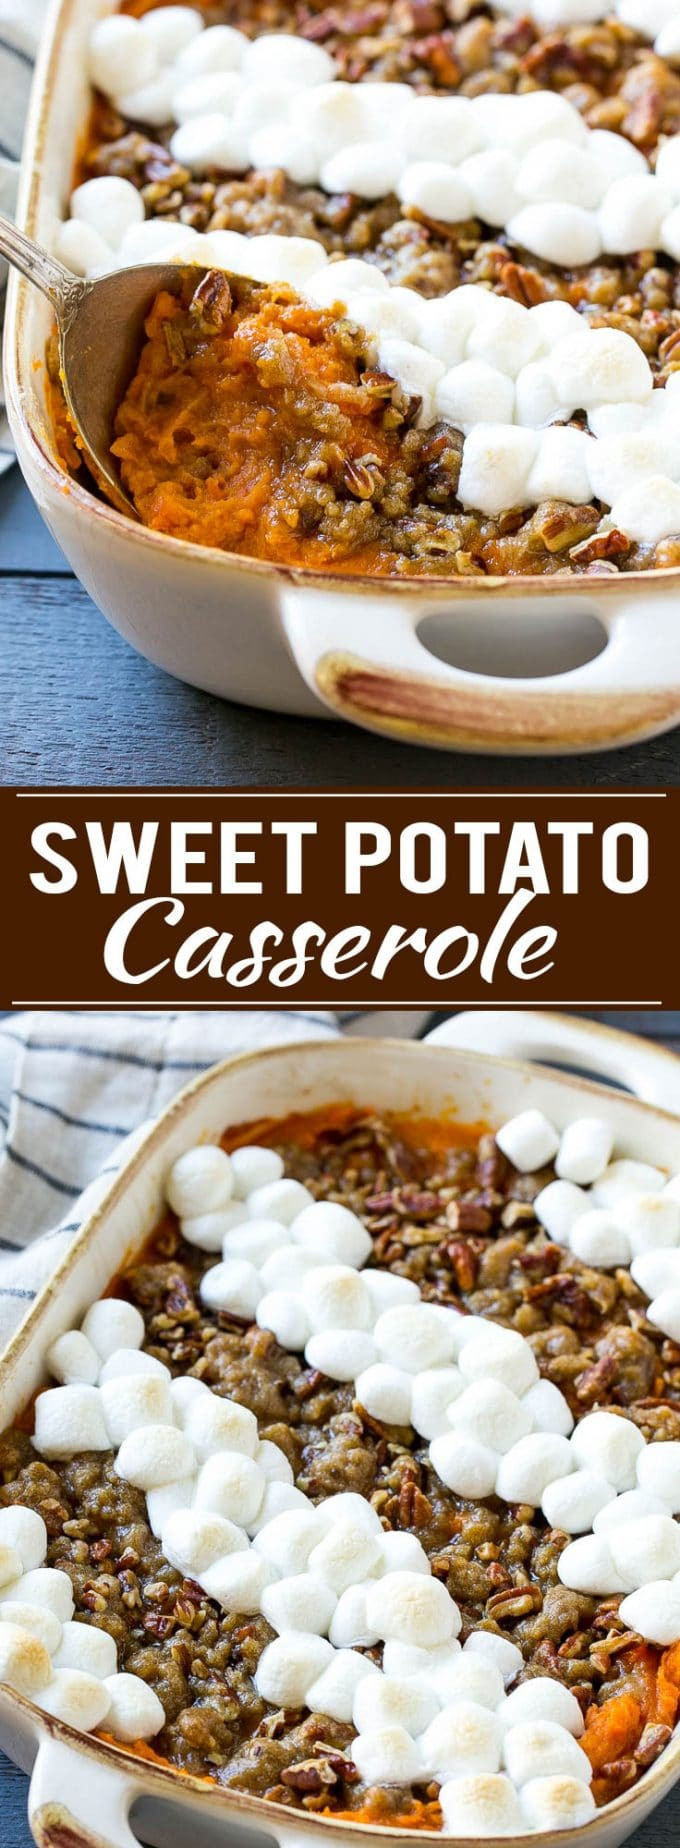 Sweet Potato Casserole Marshmallow
 sweet potato casserole with pecan and marshmallow topping